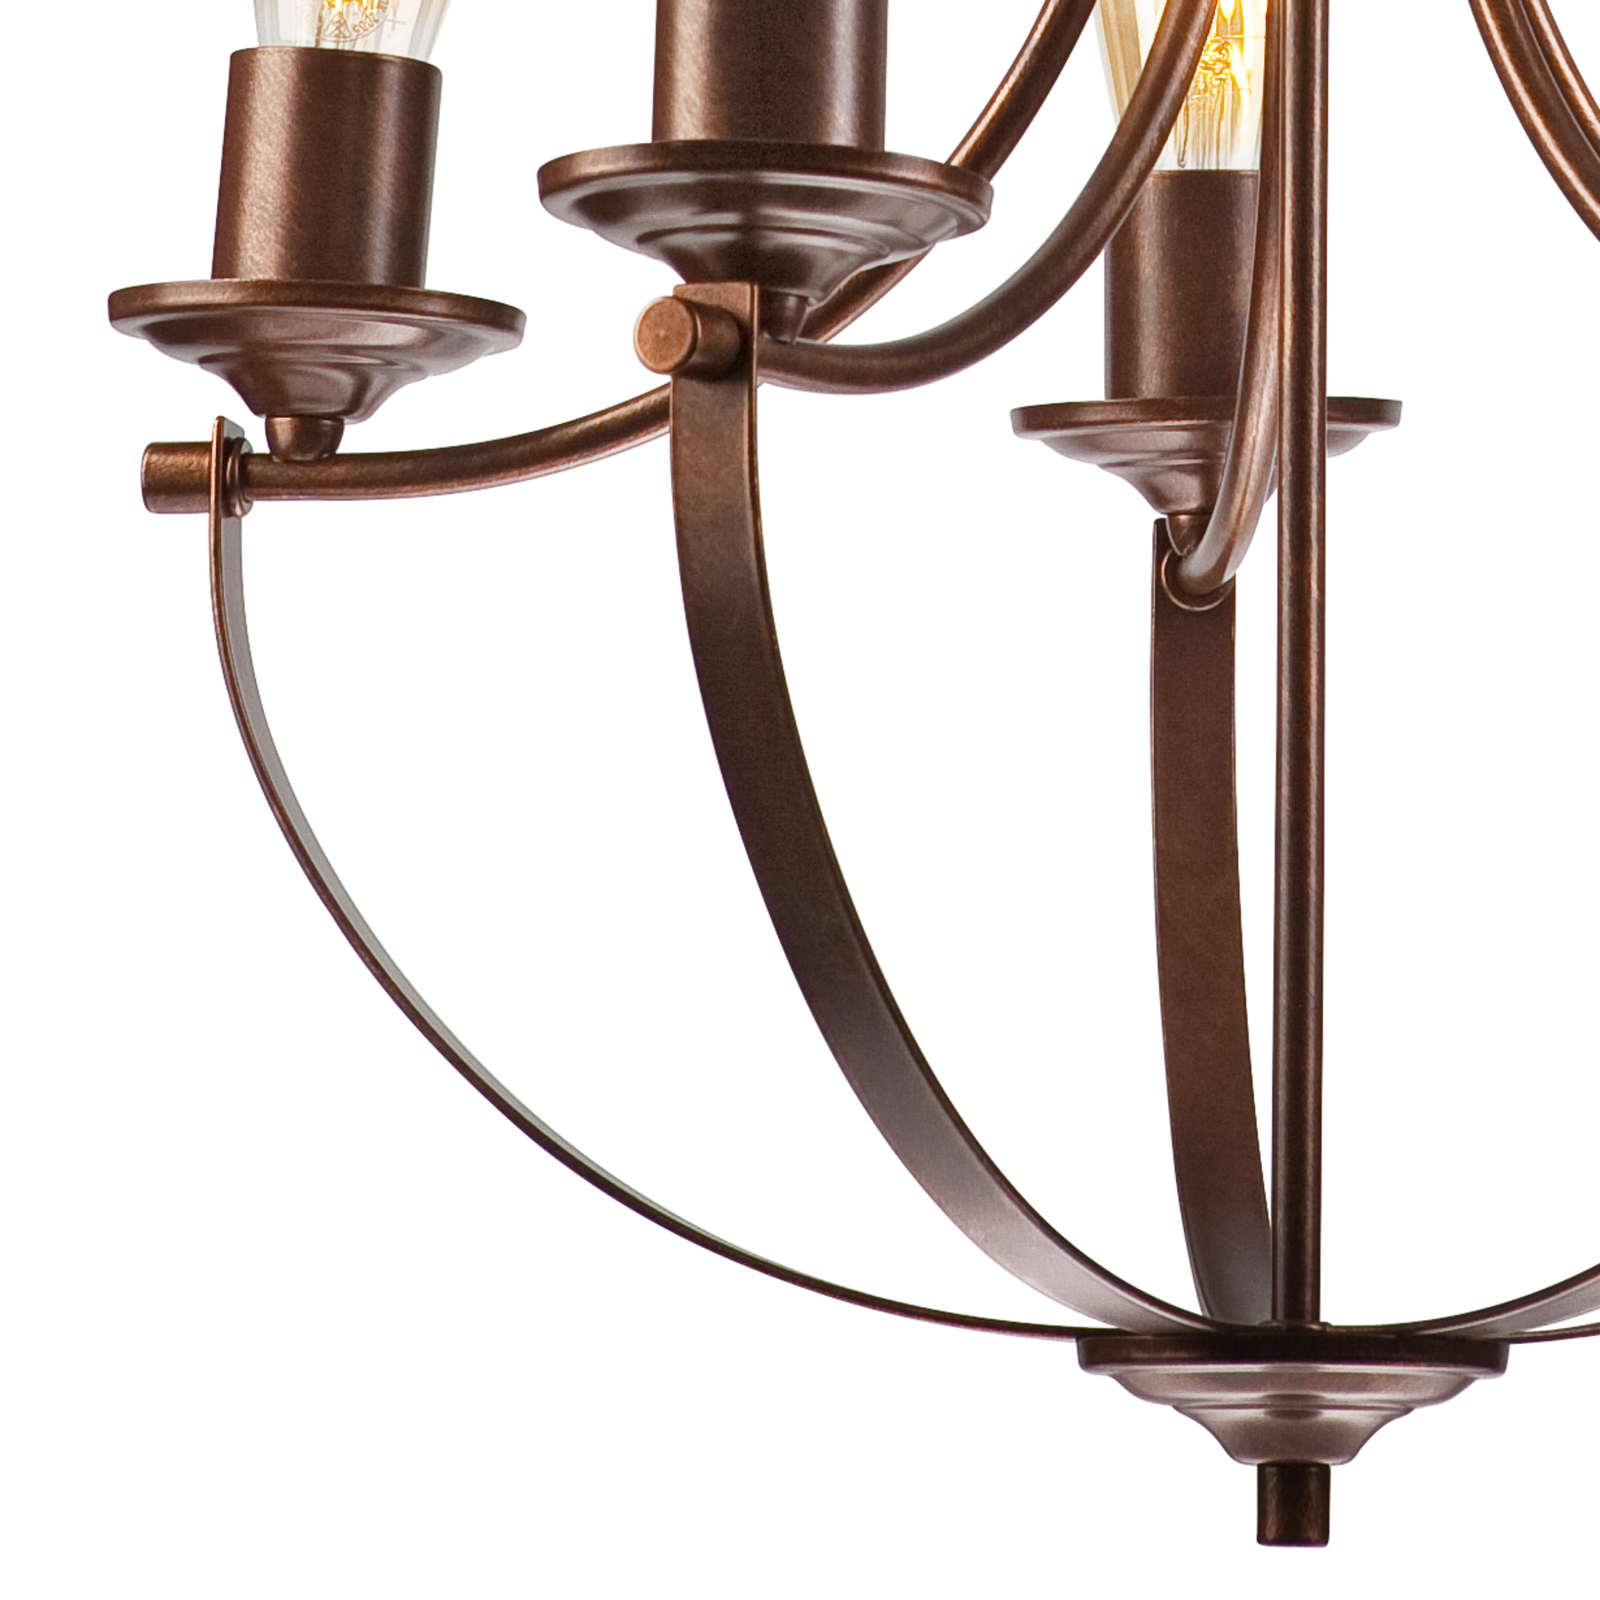 Euluna Gina chandelier in brown, 5-bulb